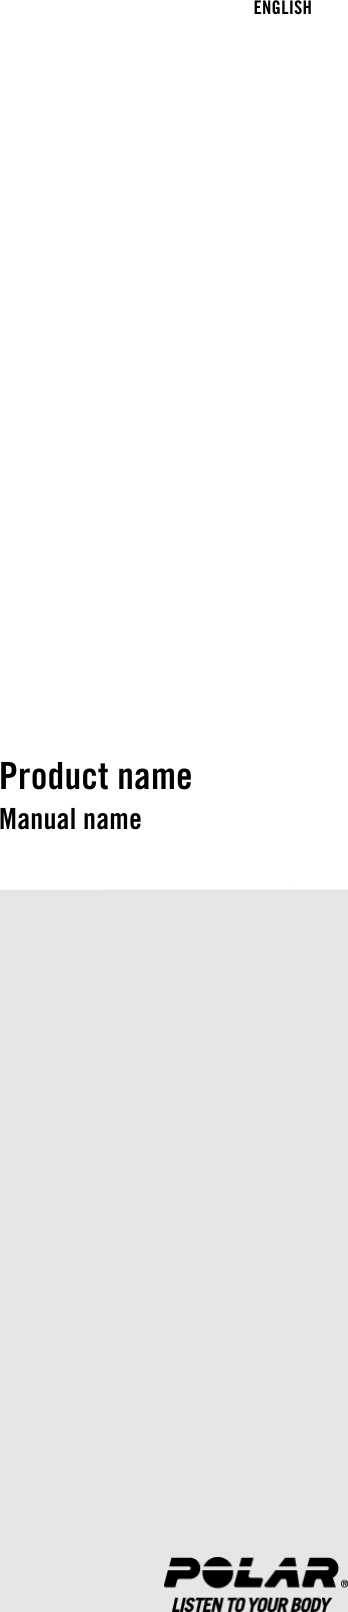 Product nameManual nameENGLISH